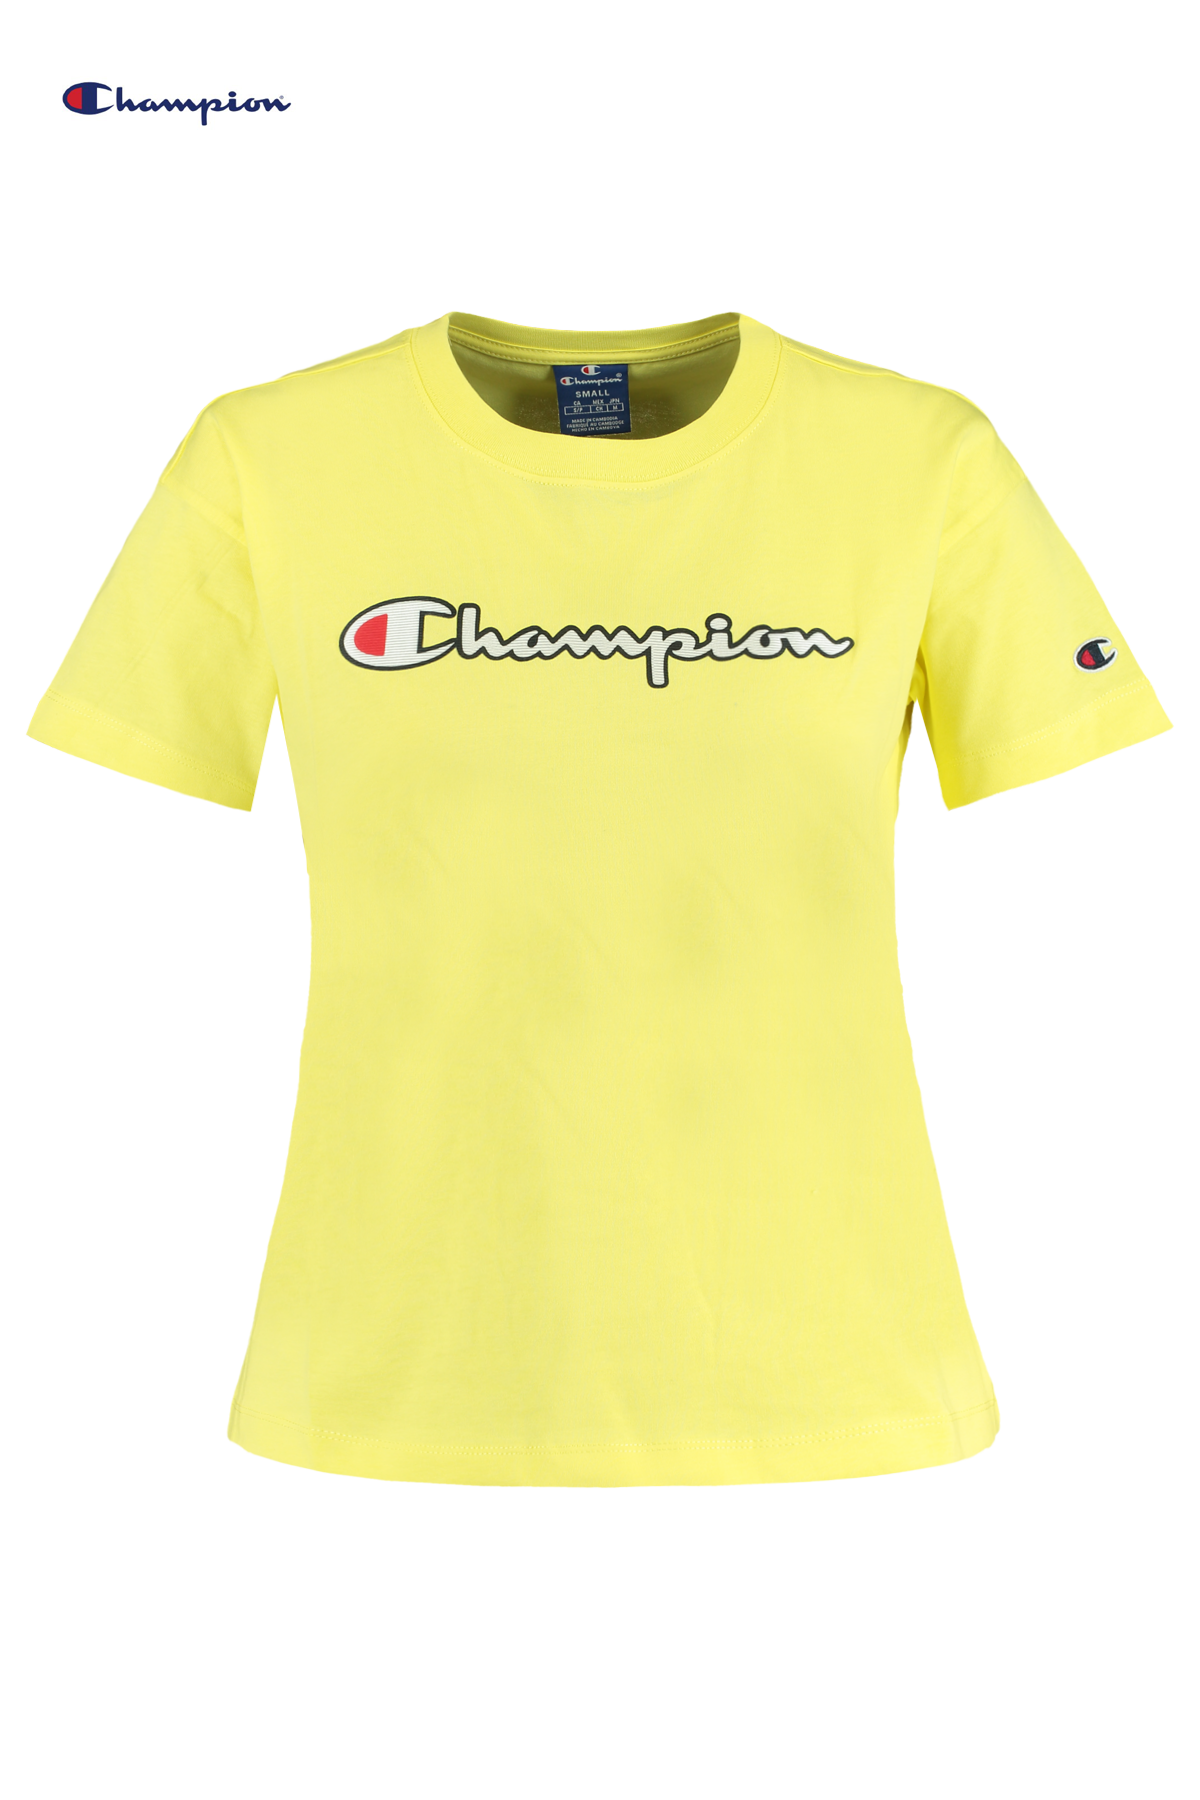 T-shirt Champion Yellow Buy Online